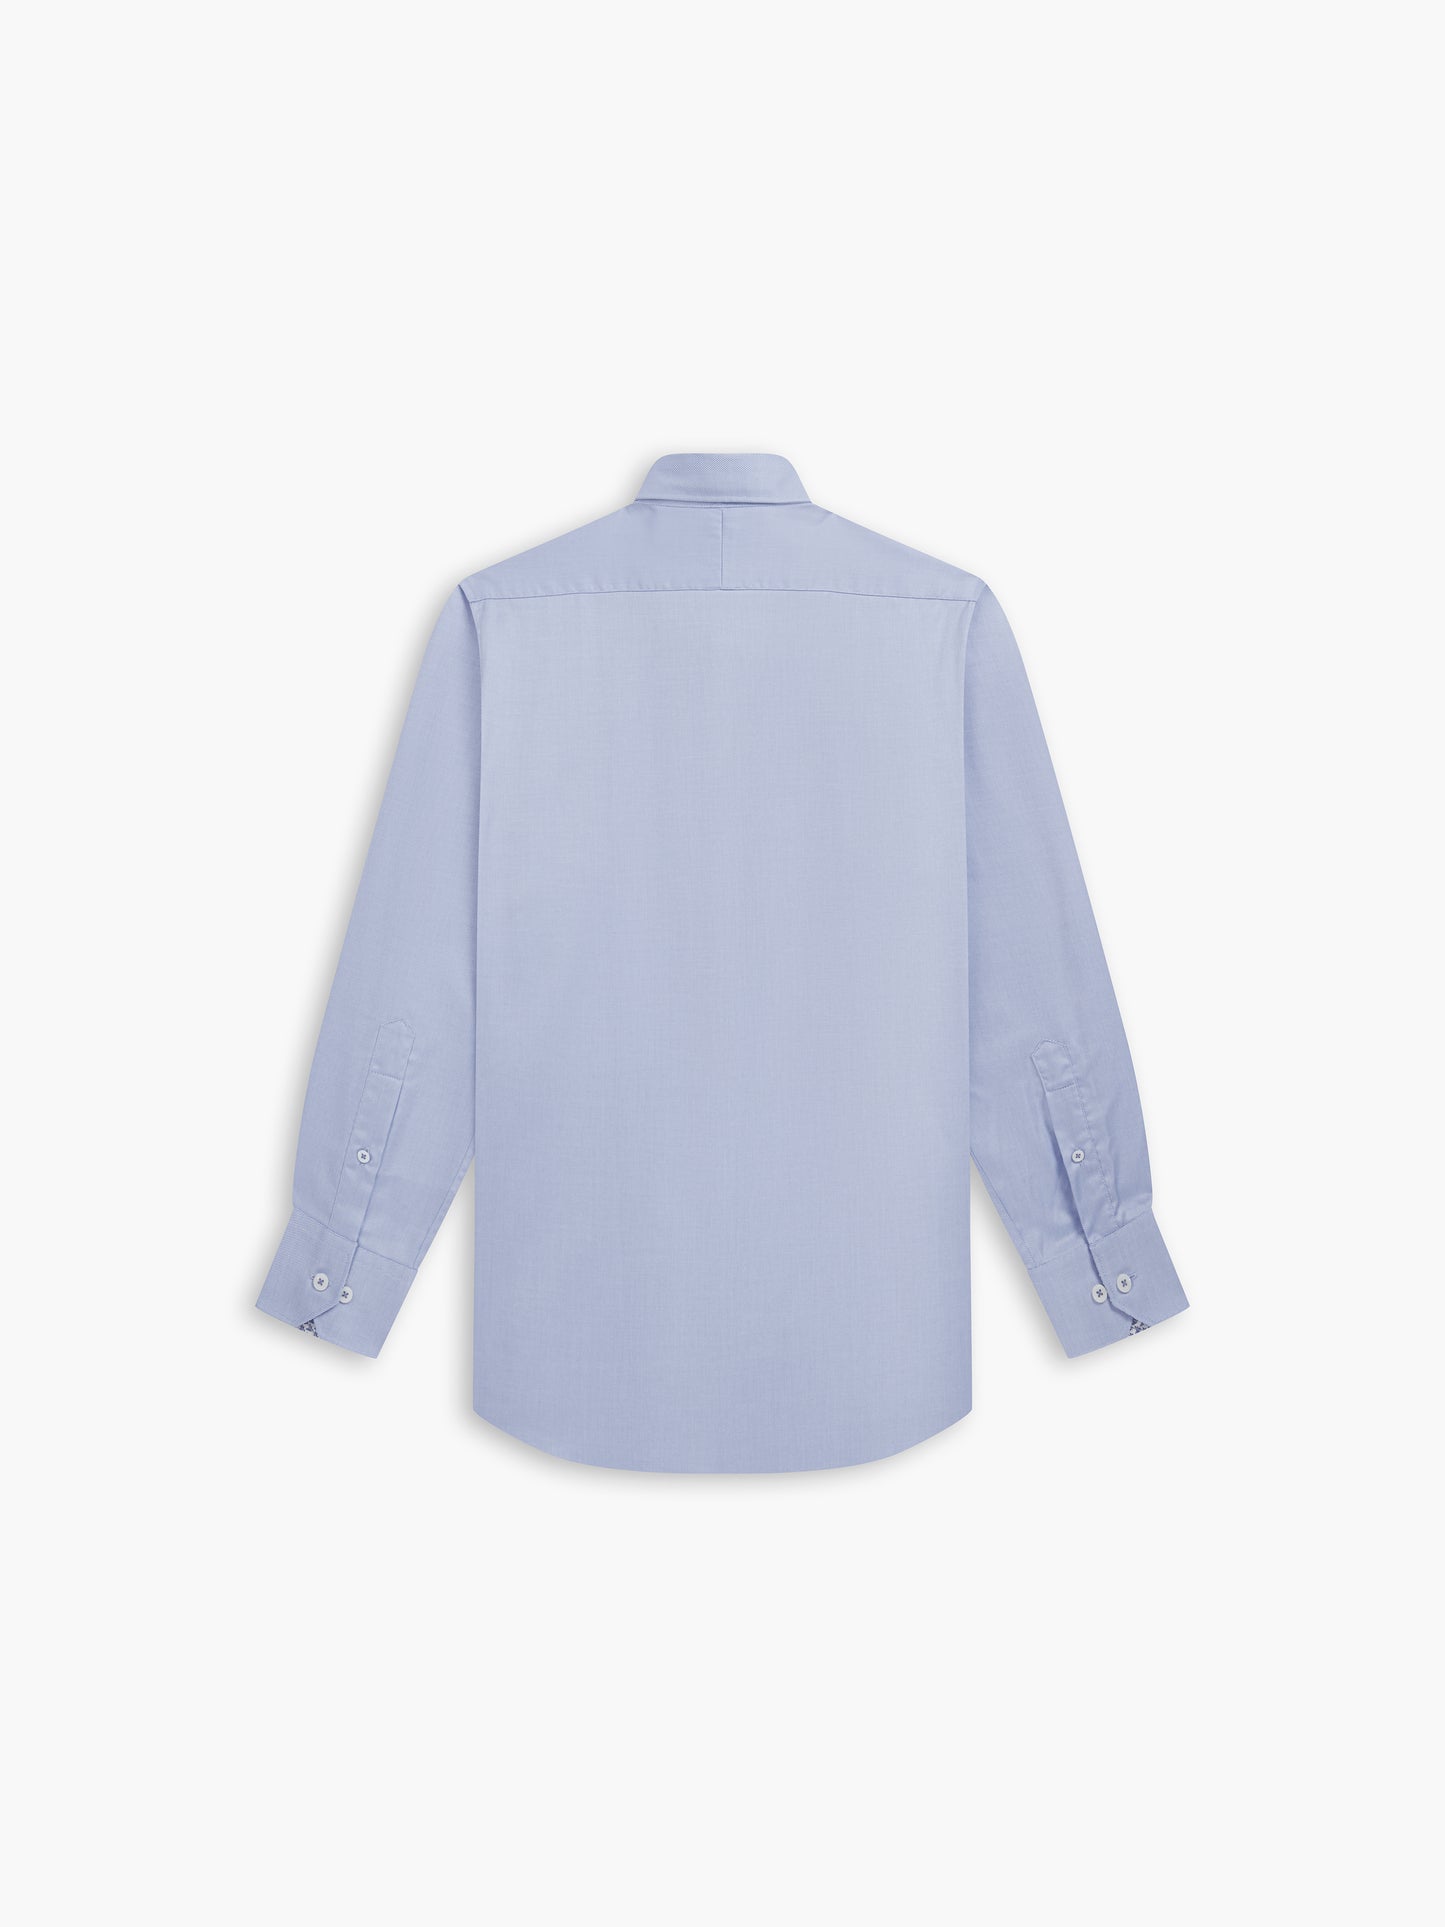 Max Cool Blue Hummingbird Trim Twill Slim Fit Single Cuff Concealed Button Down Collar Shirt